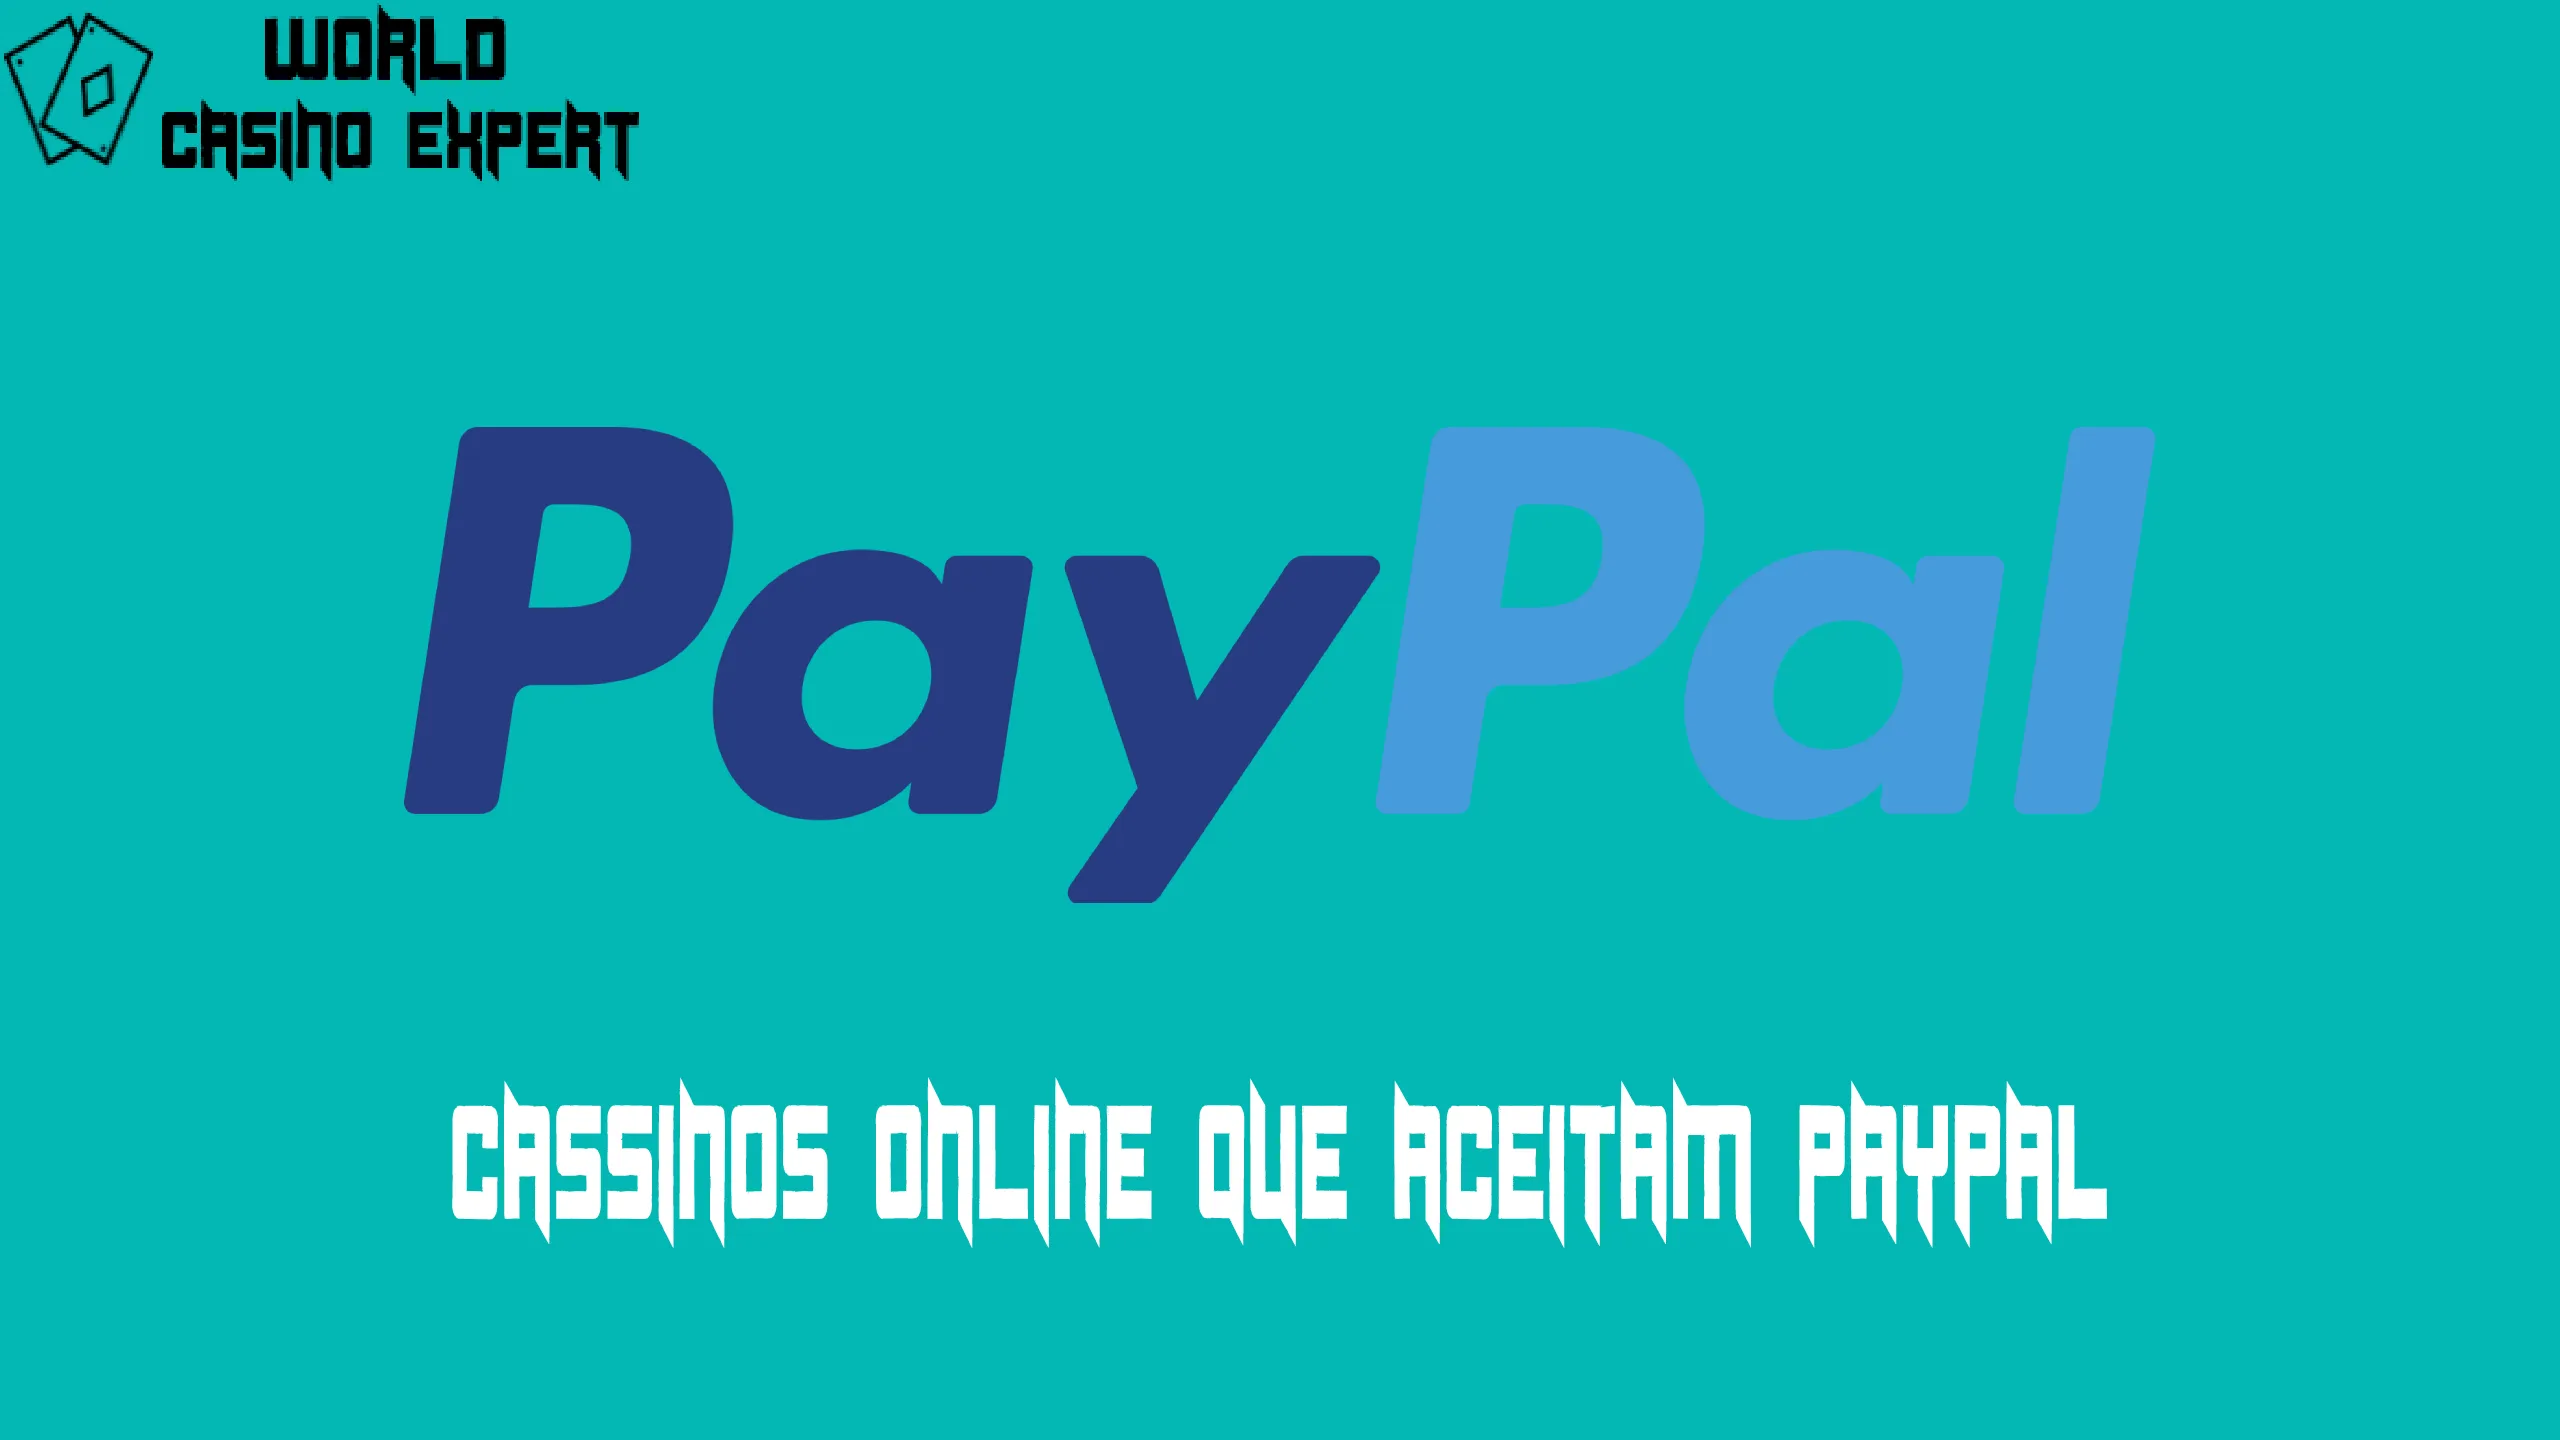 Cassinos Online que aceitam PayPal | World Casino Expert Brasil